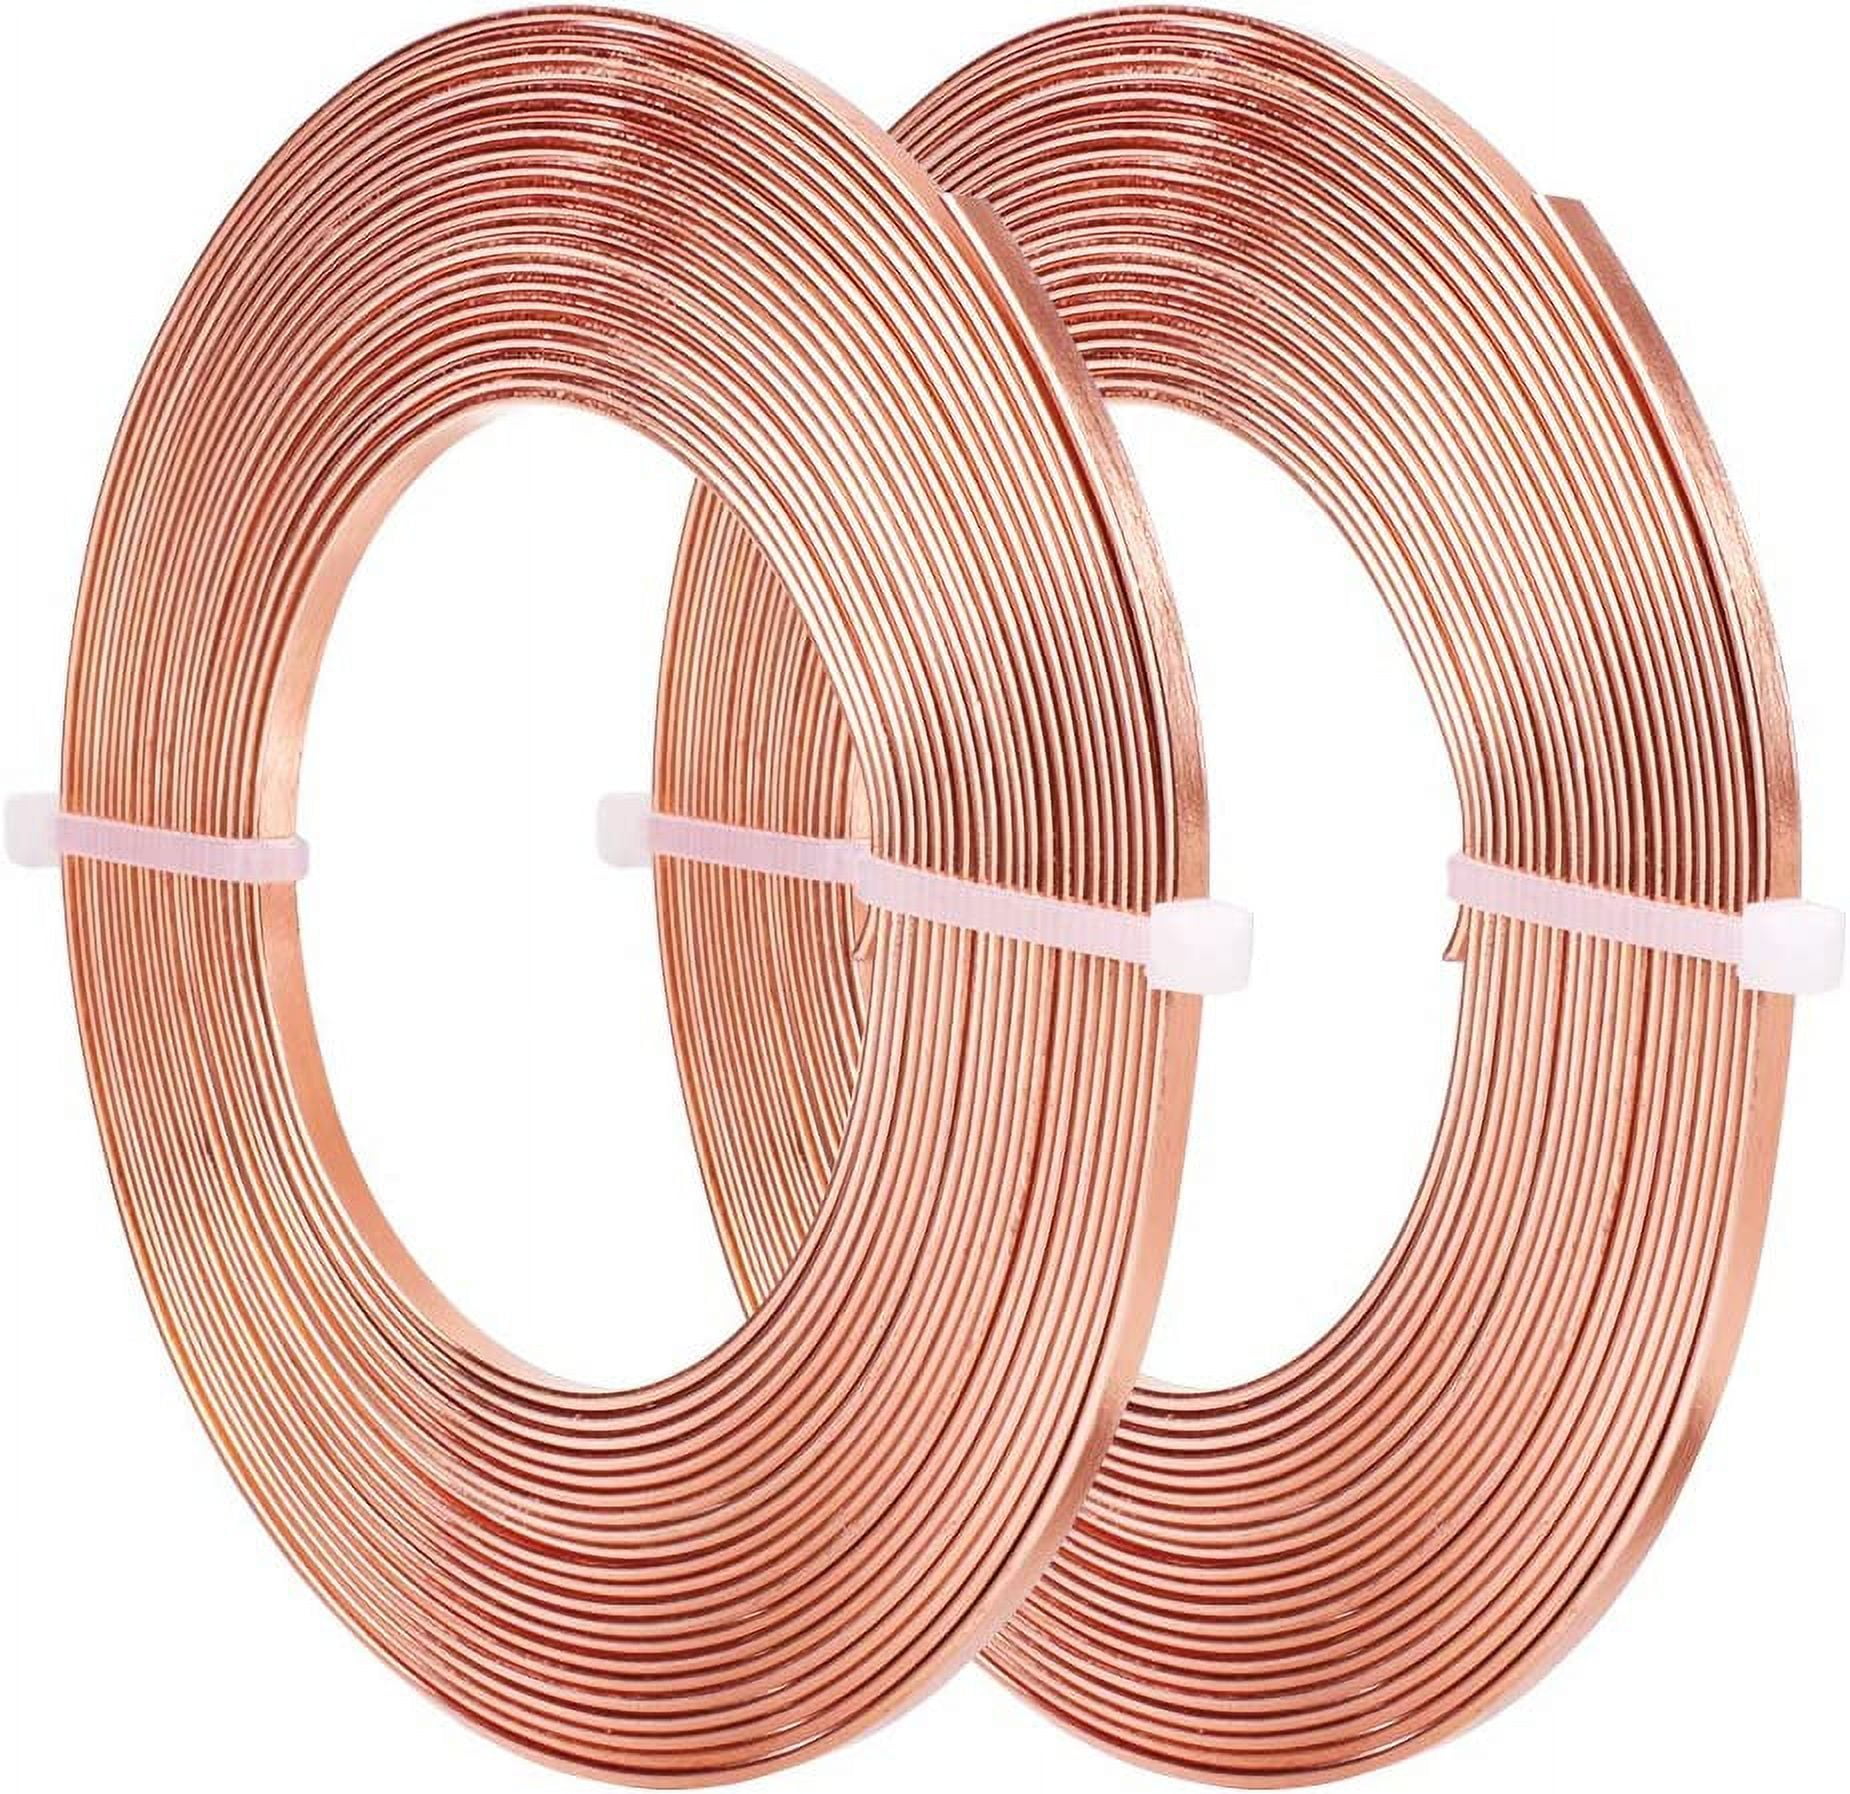 Wholesale Fingerinspire Round Copper Jewelry Wire 